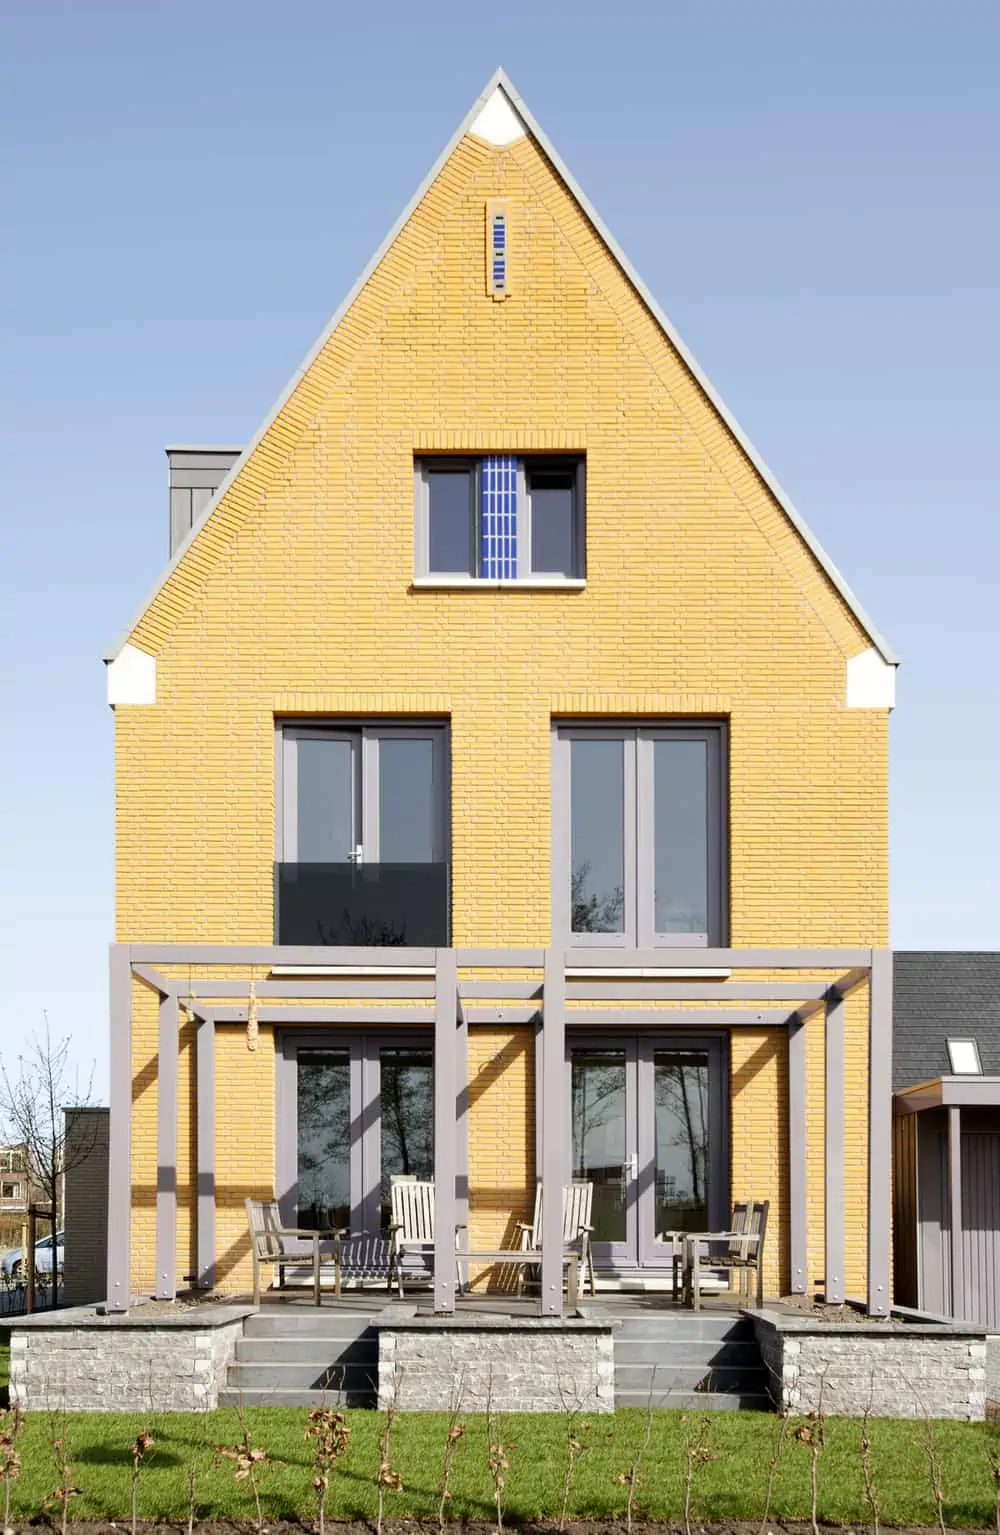 New house in Vathorst, Amersfoort, the Netherlands